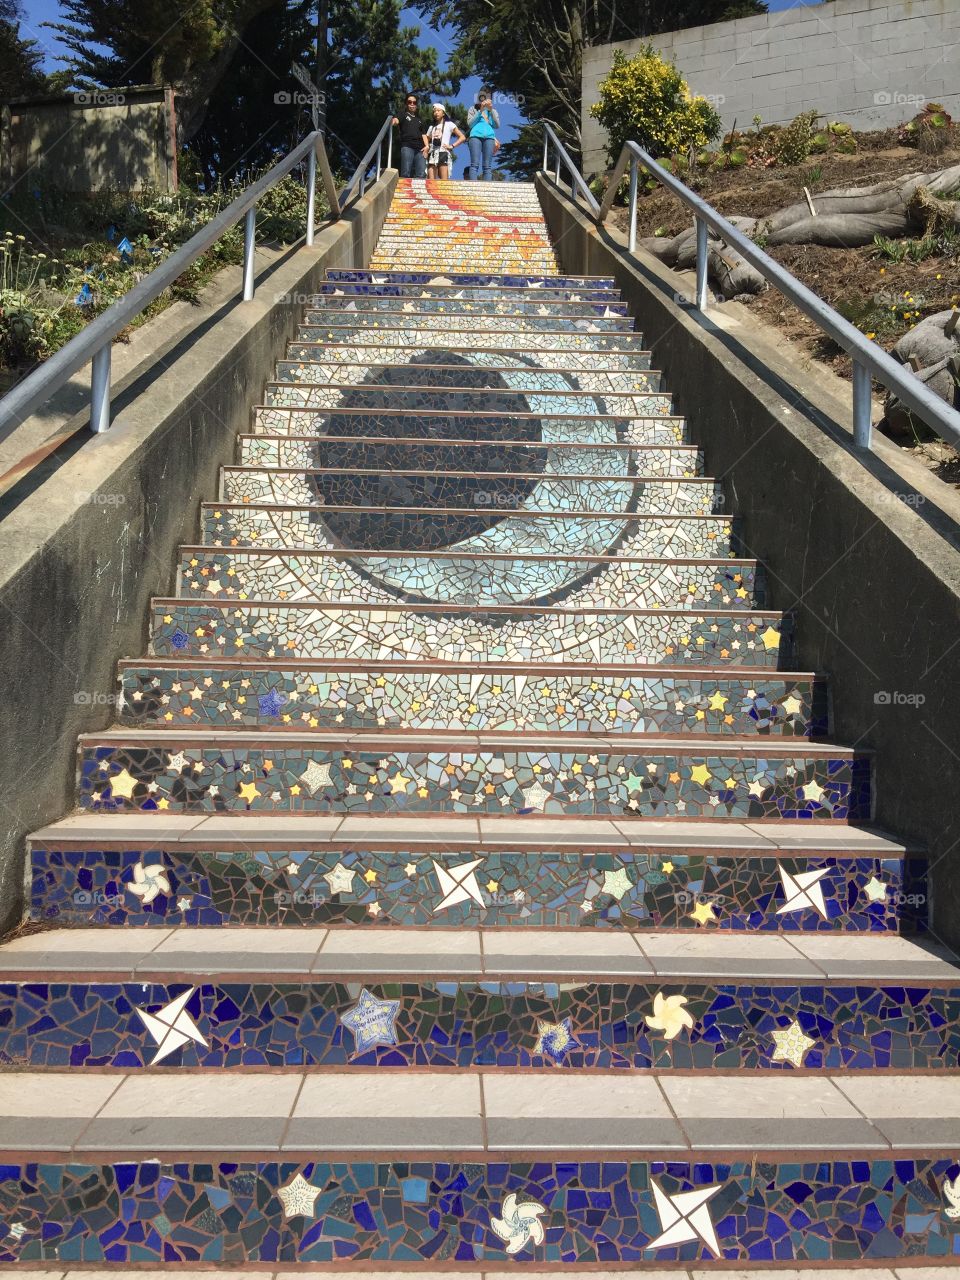 16th avenue and moraga mosaic tile
San Francisco, California 